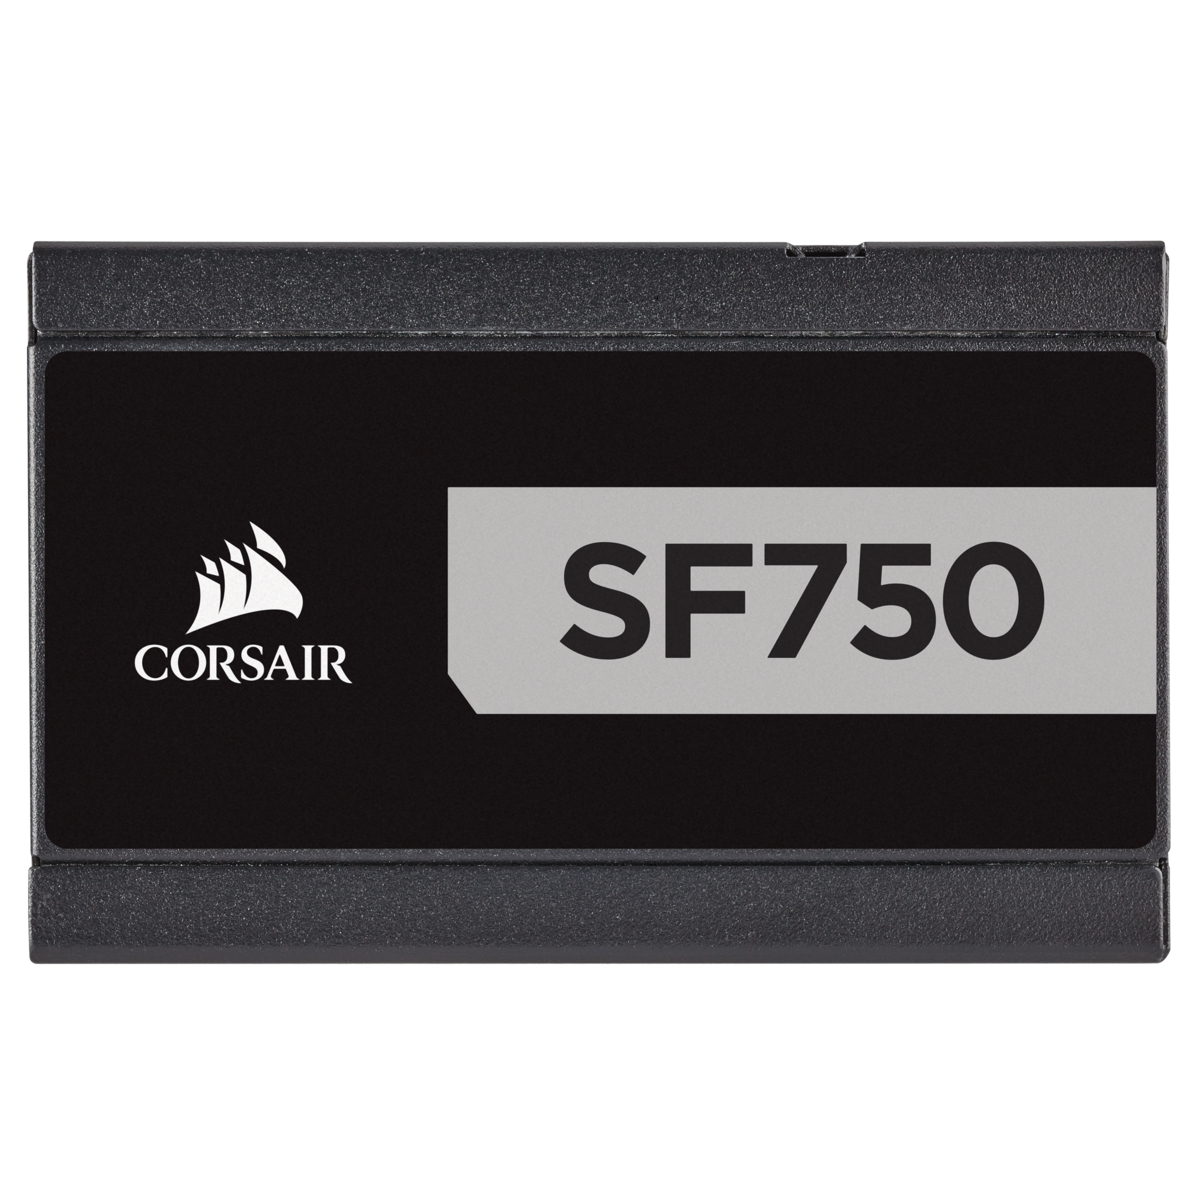 Corsair SF750 80 PLUS Platinum SFX Power Supply